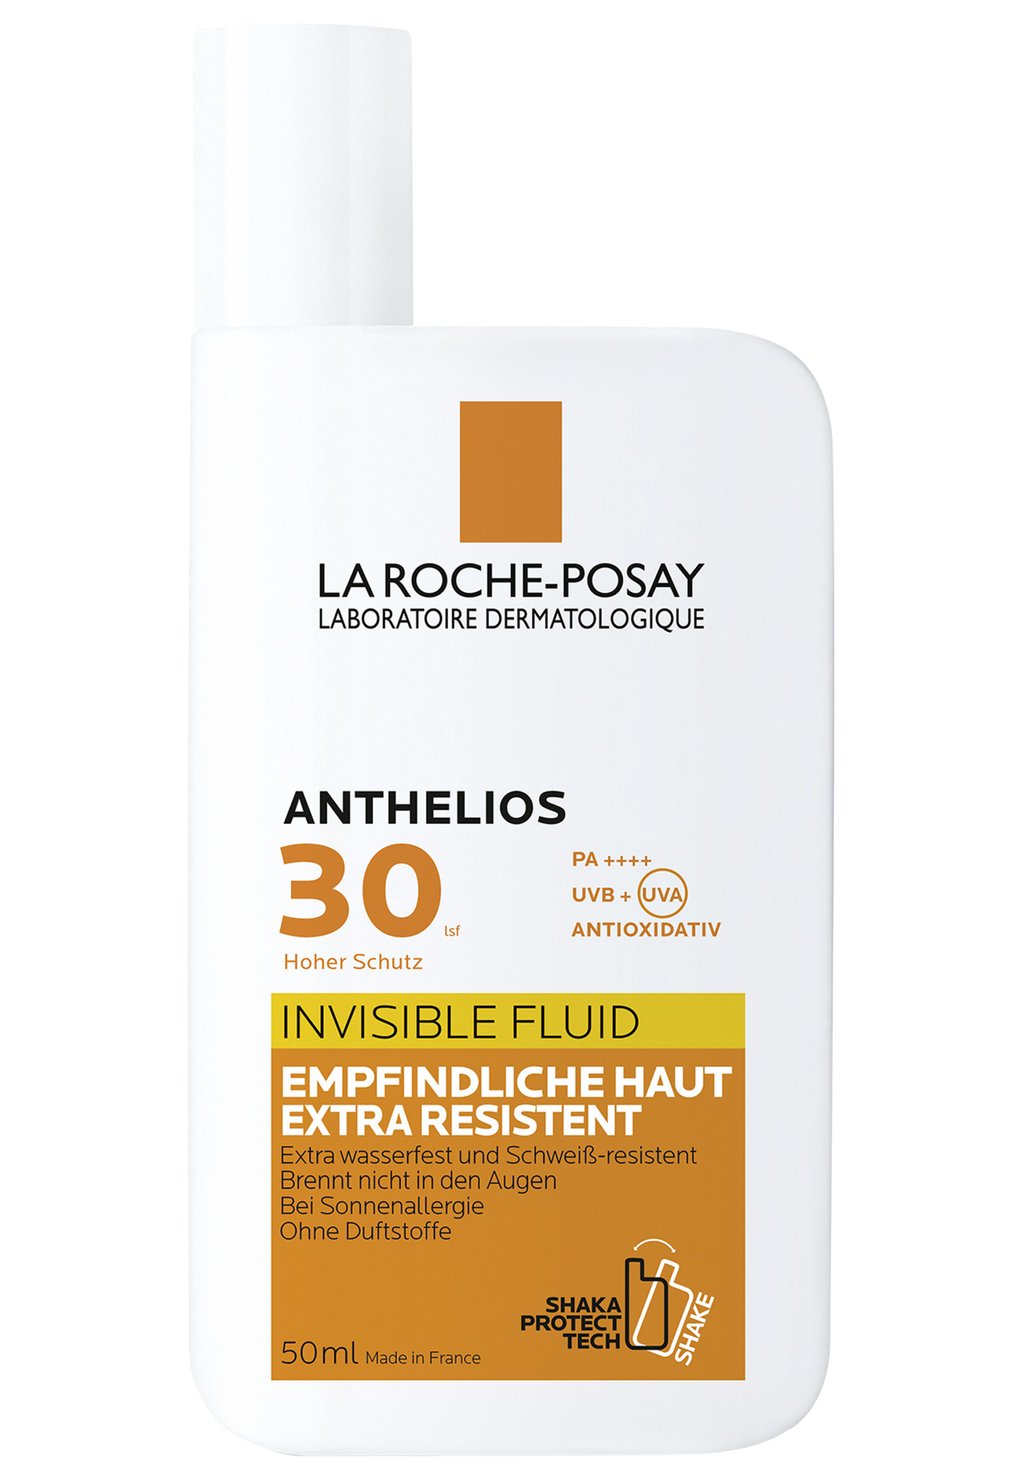 Защита от солнца ANTHELIOS INVISIBLE FLUID La Roche-Posay